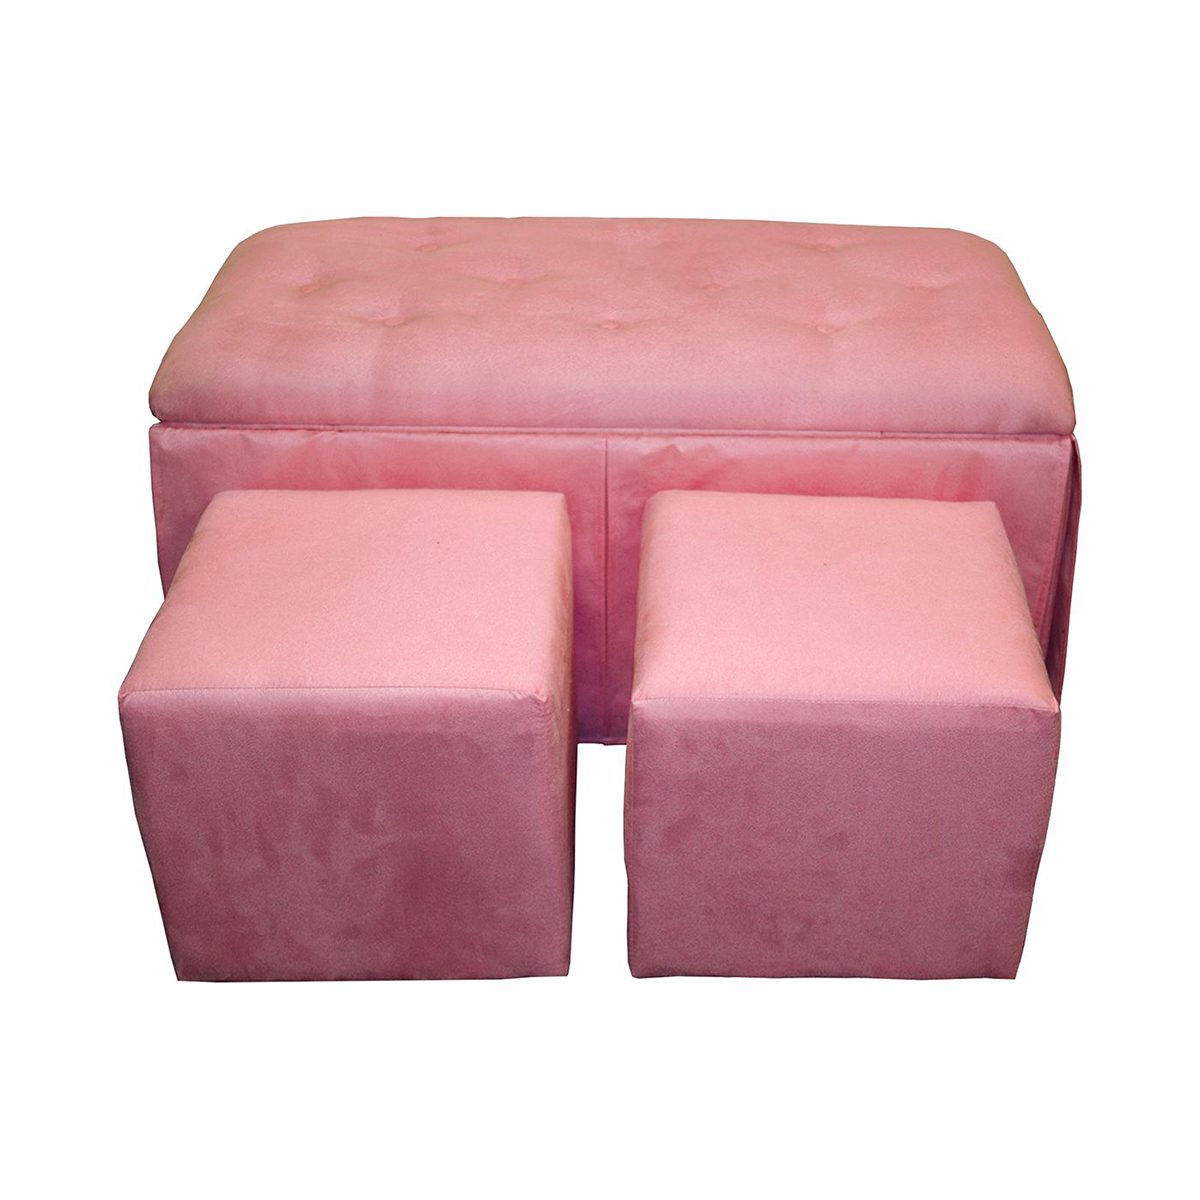 Pink Microfiber Storage Bench